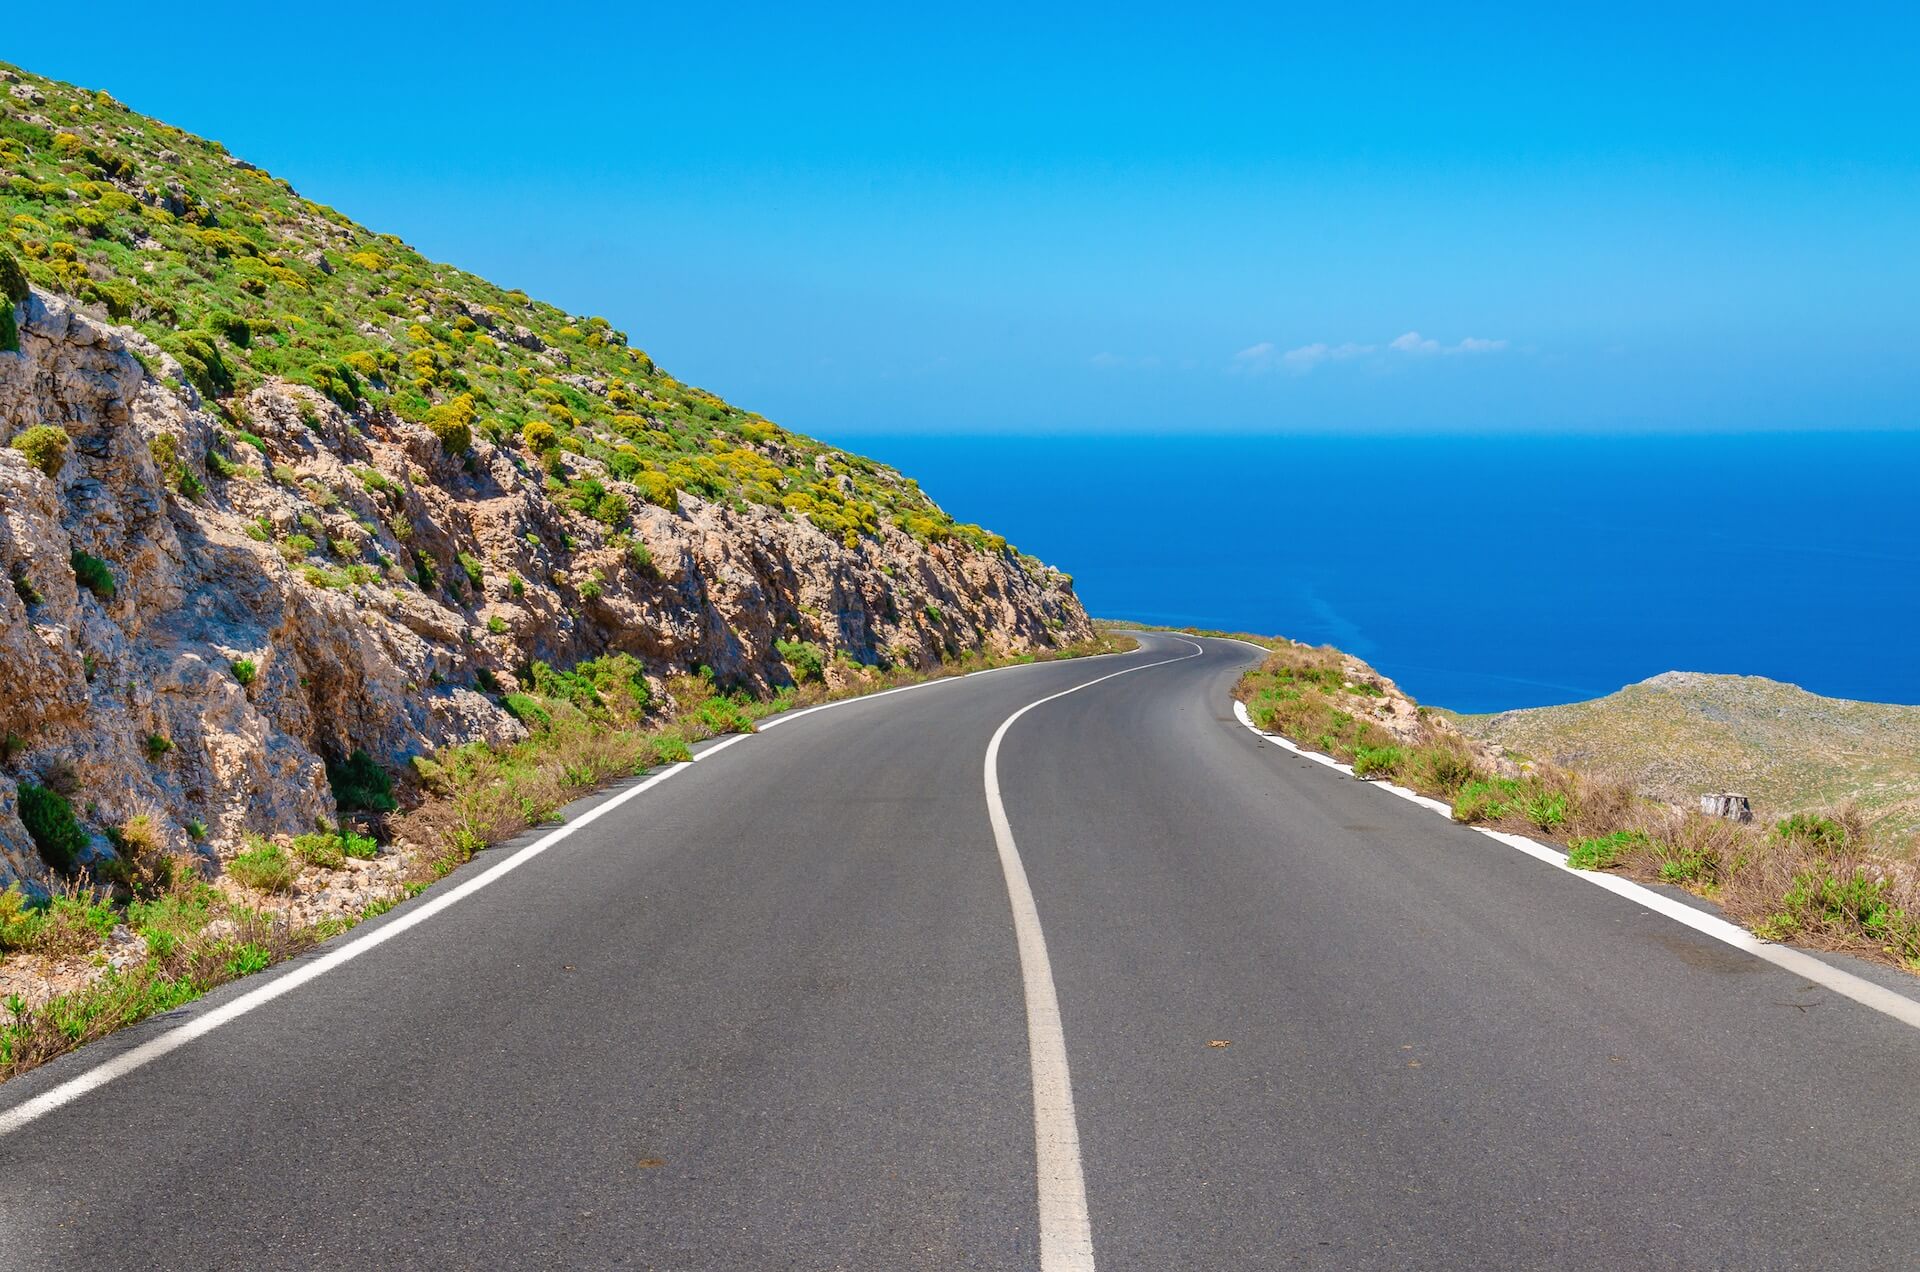 The road on Mykonos